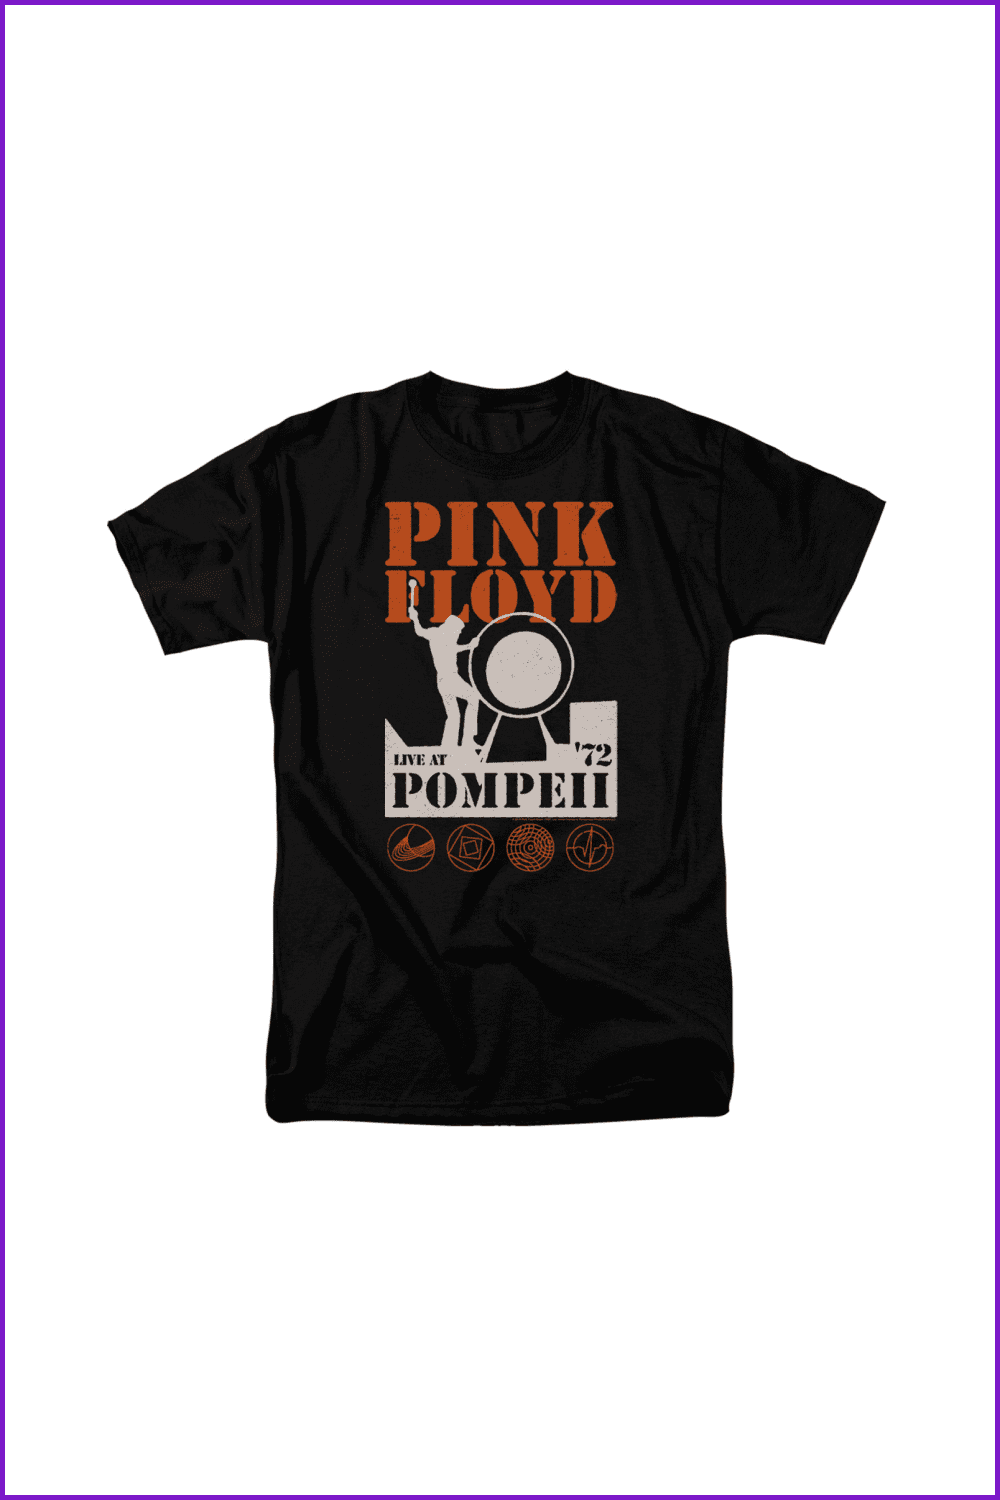 Pink Floyd T-Shirt - Pompeii.